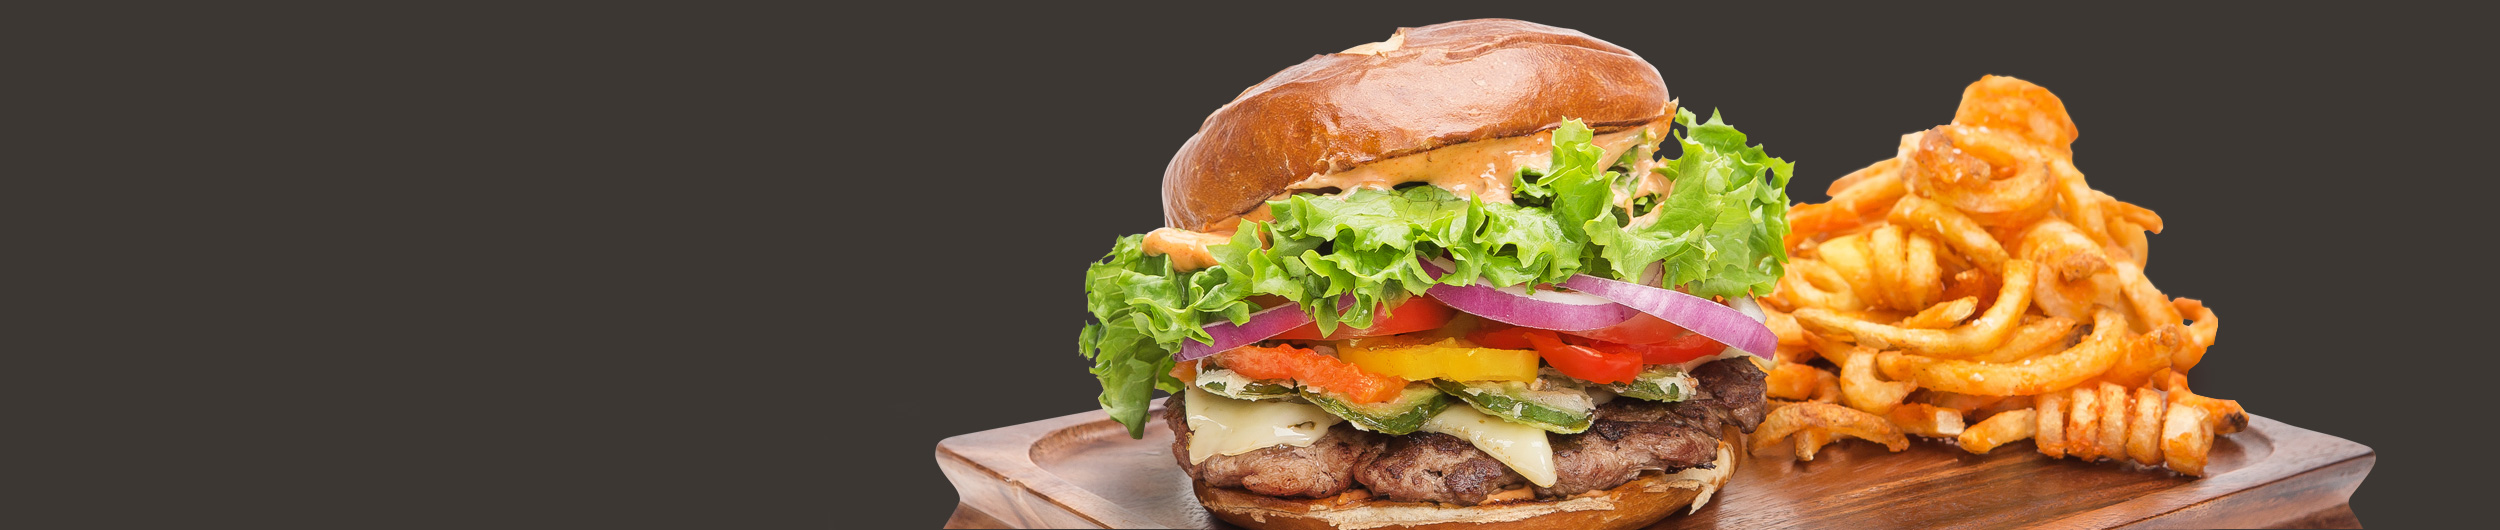 burgers-background